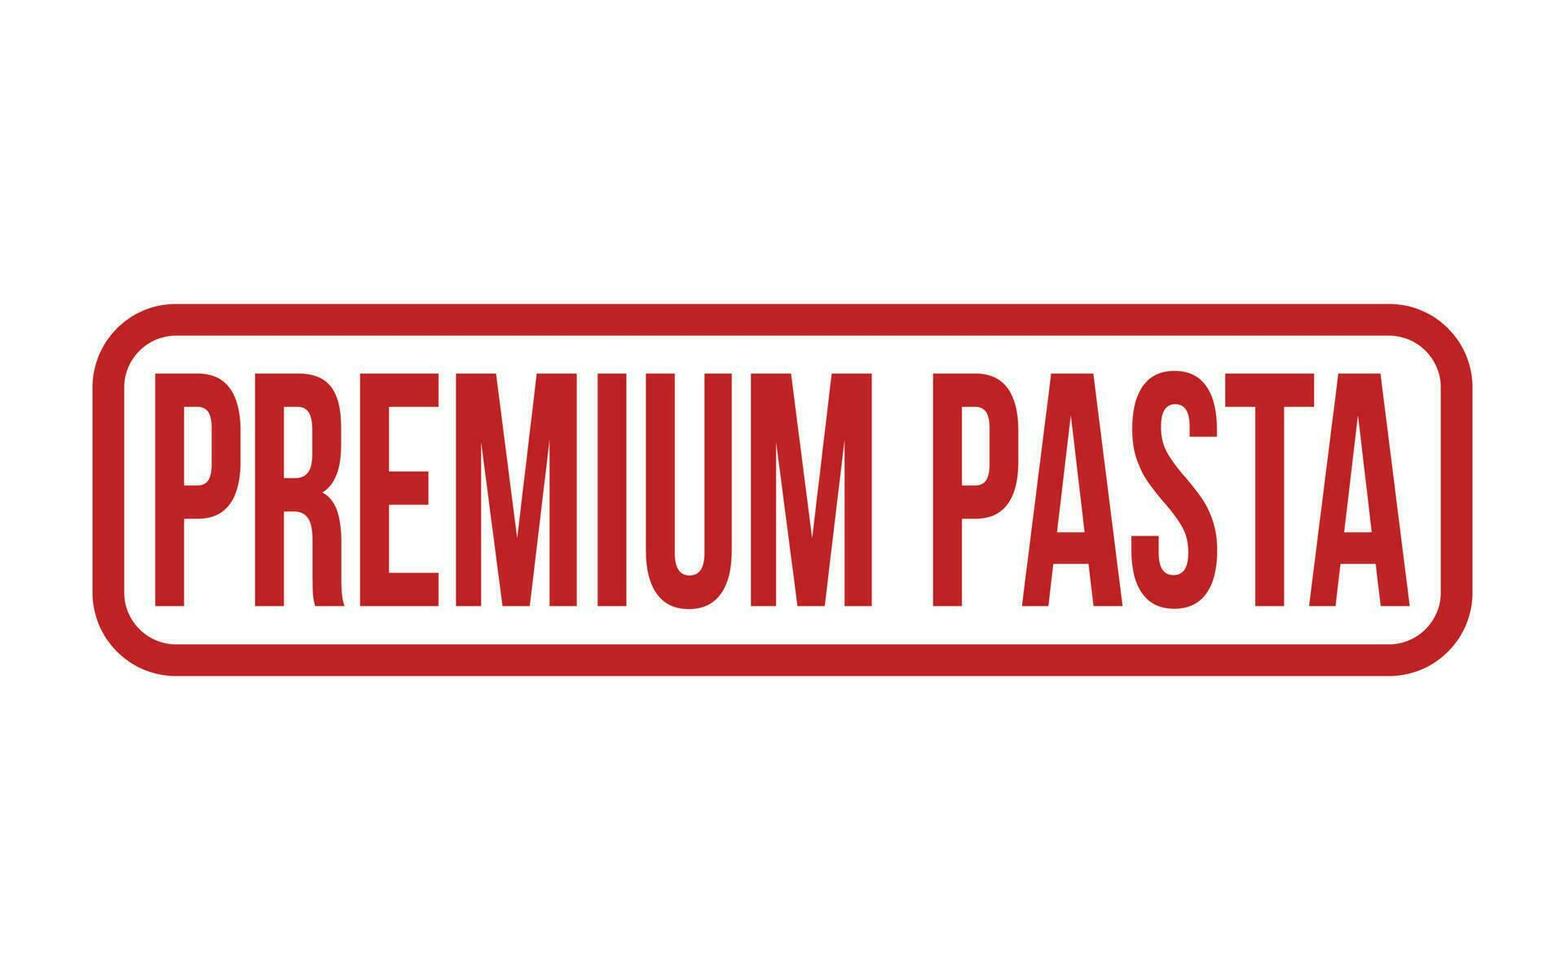 Red Premium Pasta Rubber Stamp Seal Vector